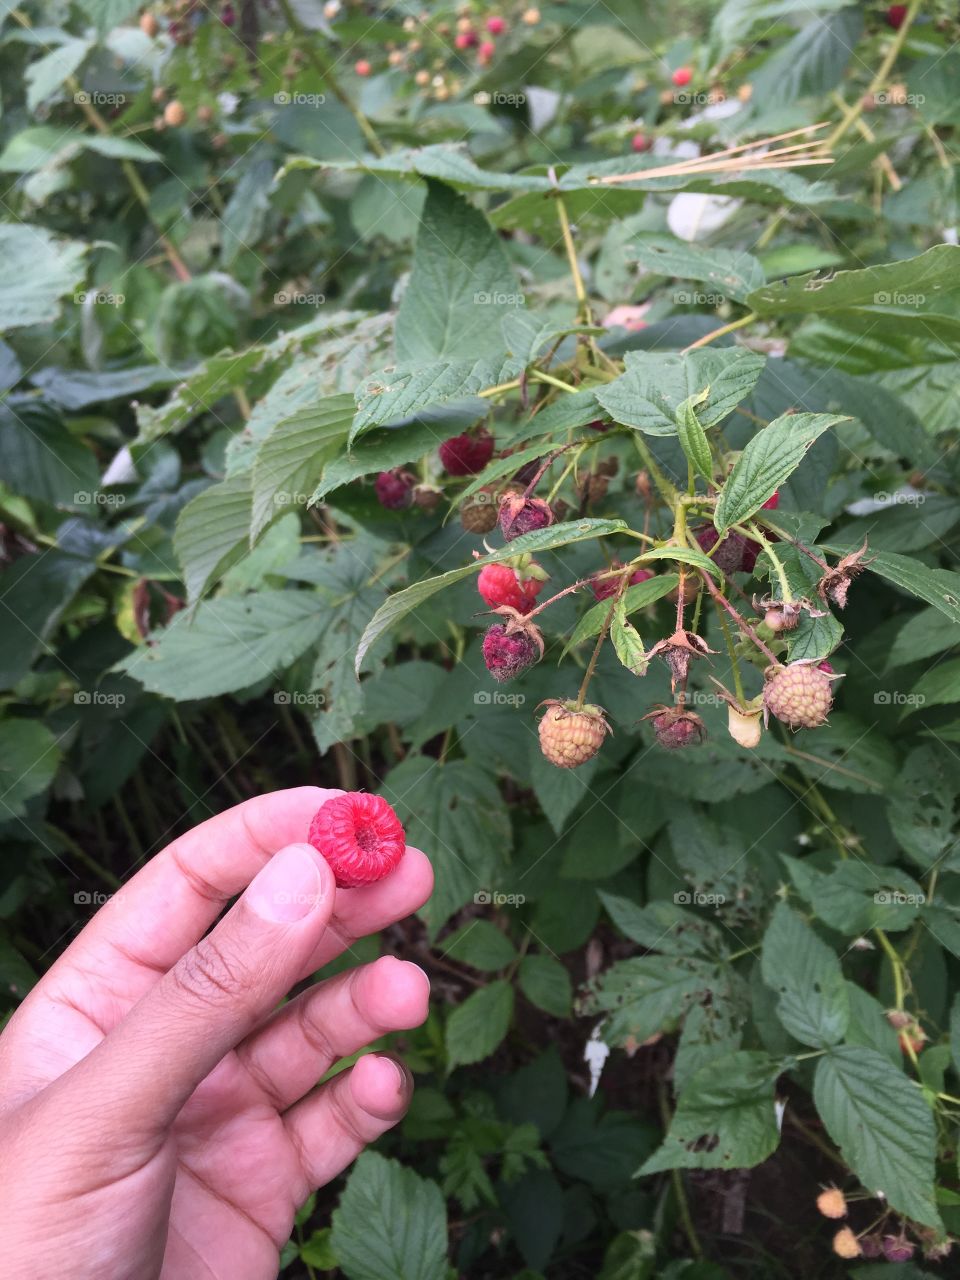 Picking raspberries at a fruit farm 